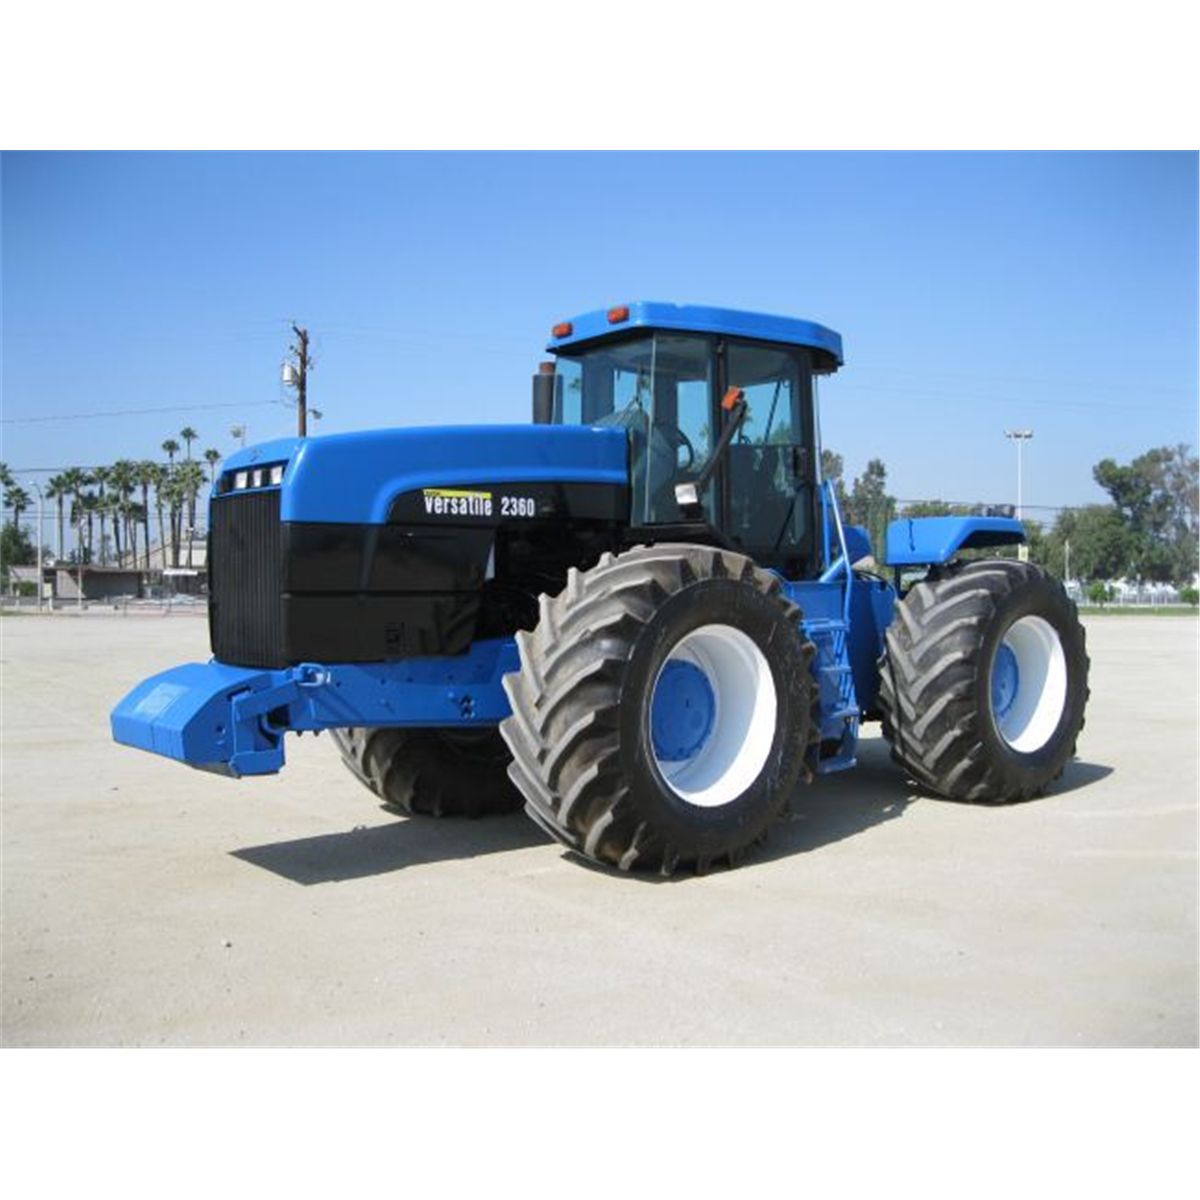 2002 Buhler Versatile 2360 4x4 Ag Tractor